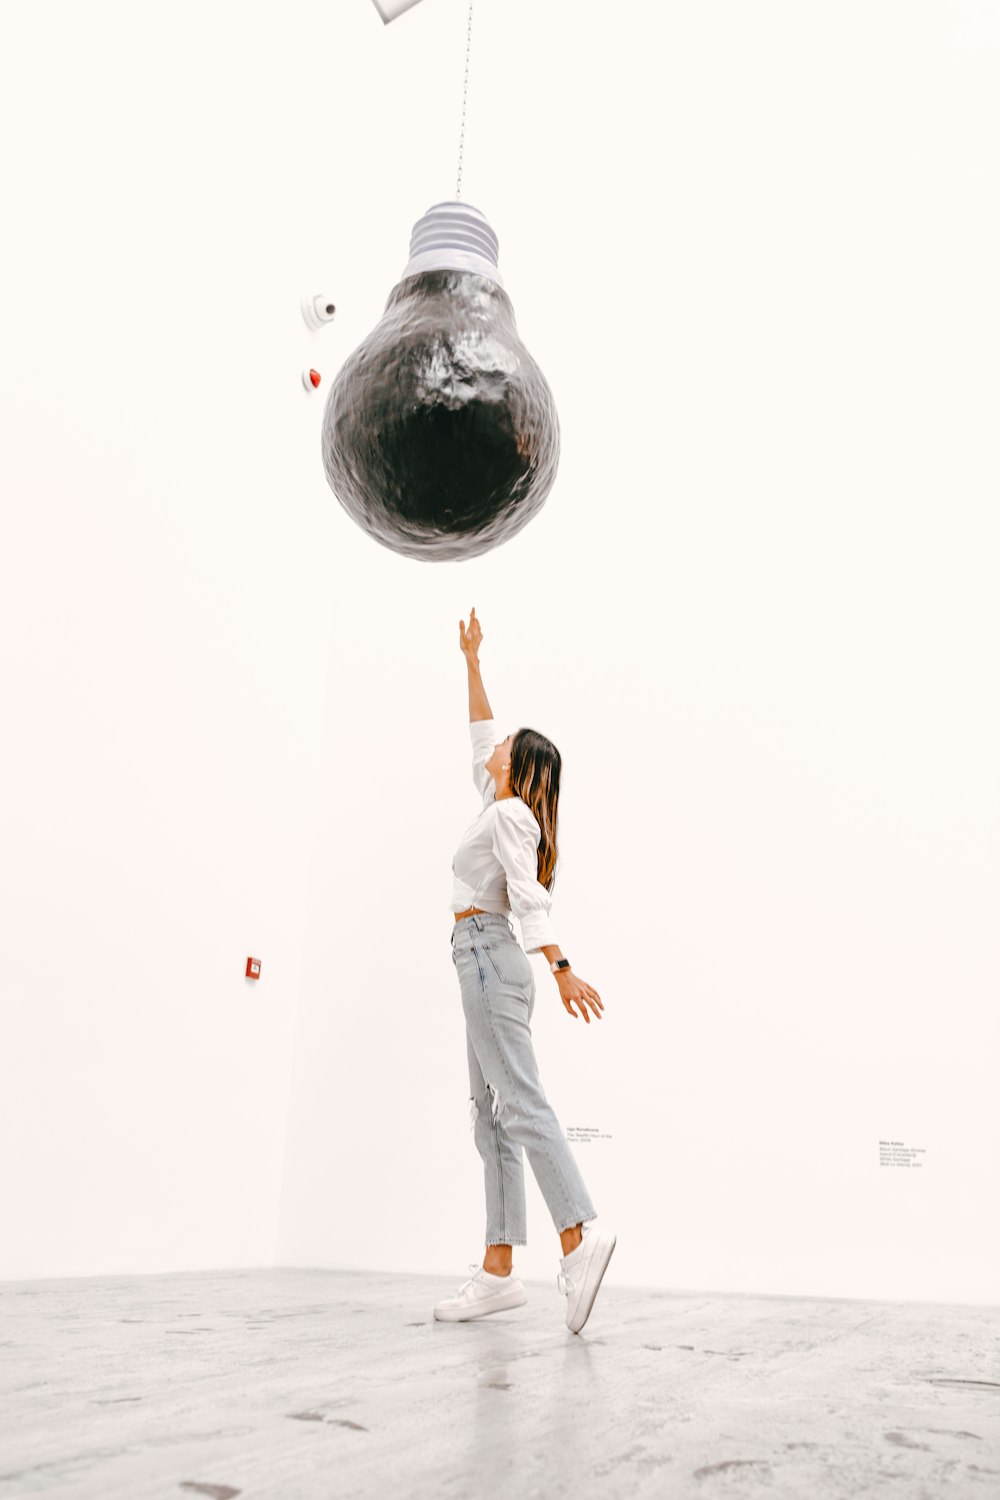 Frau in weißem ärmellosem Kleid auf Globus stehend